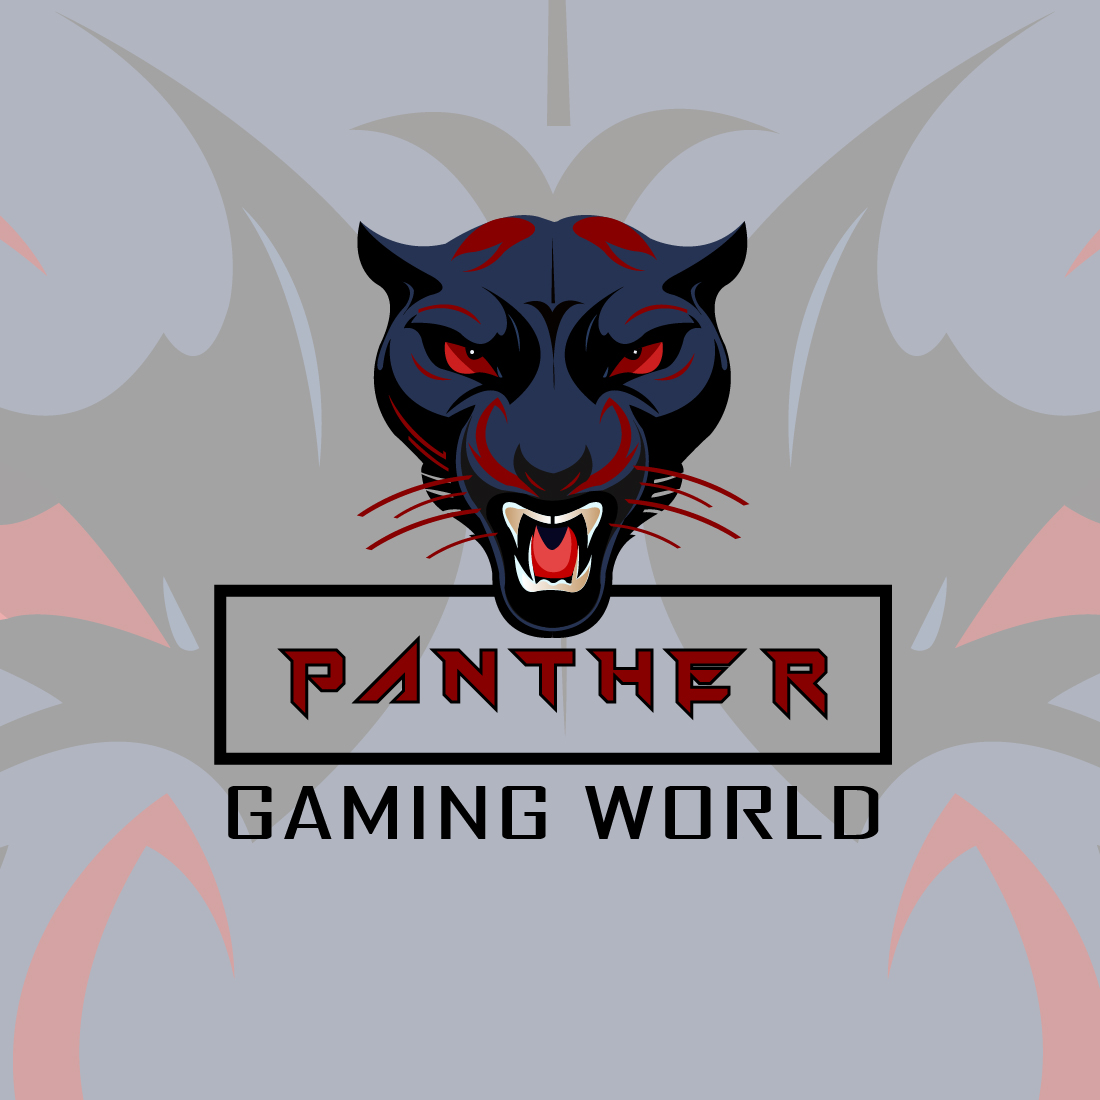 Black panther mascot logo preview image.